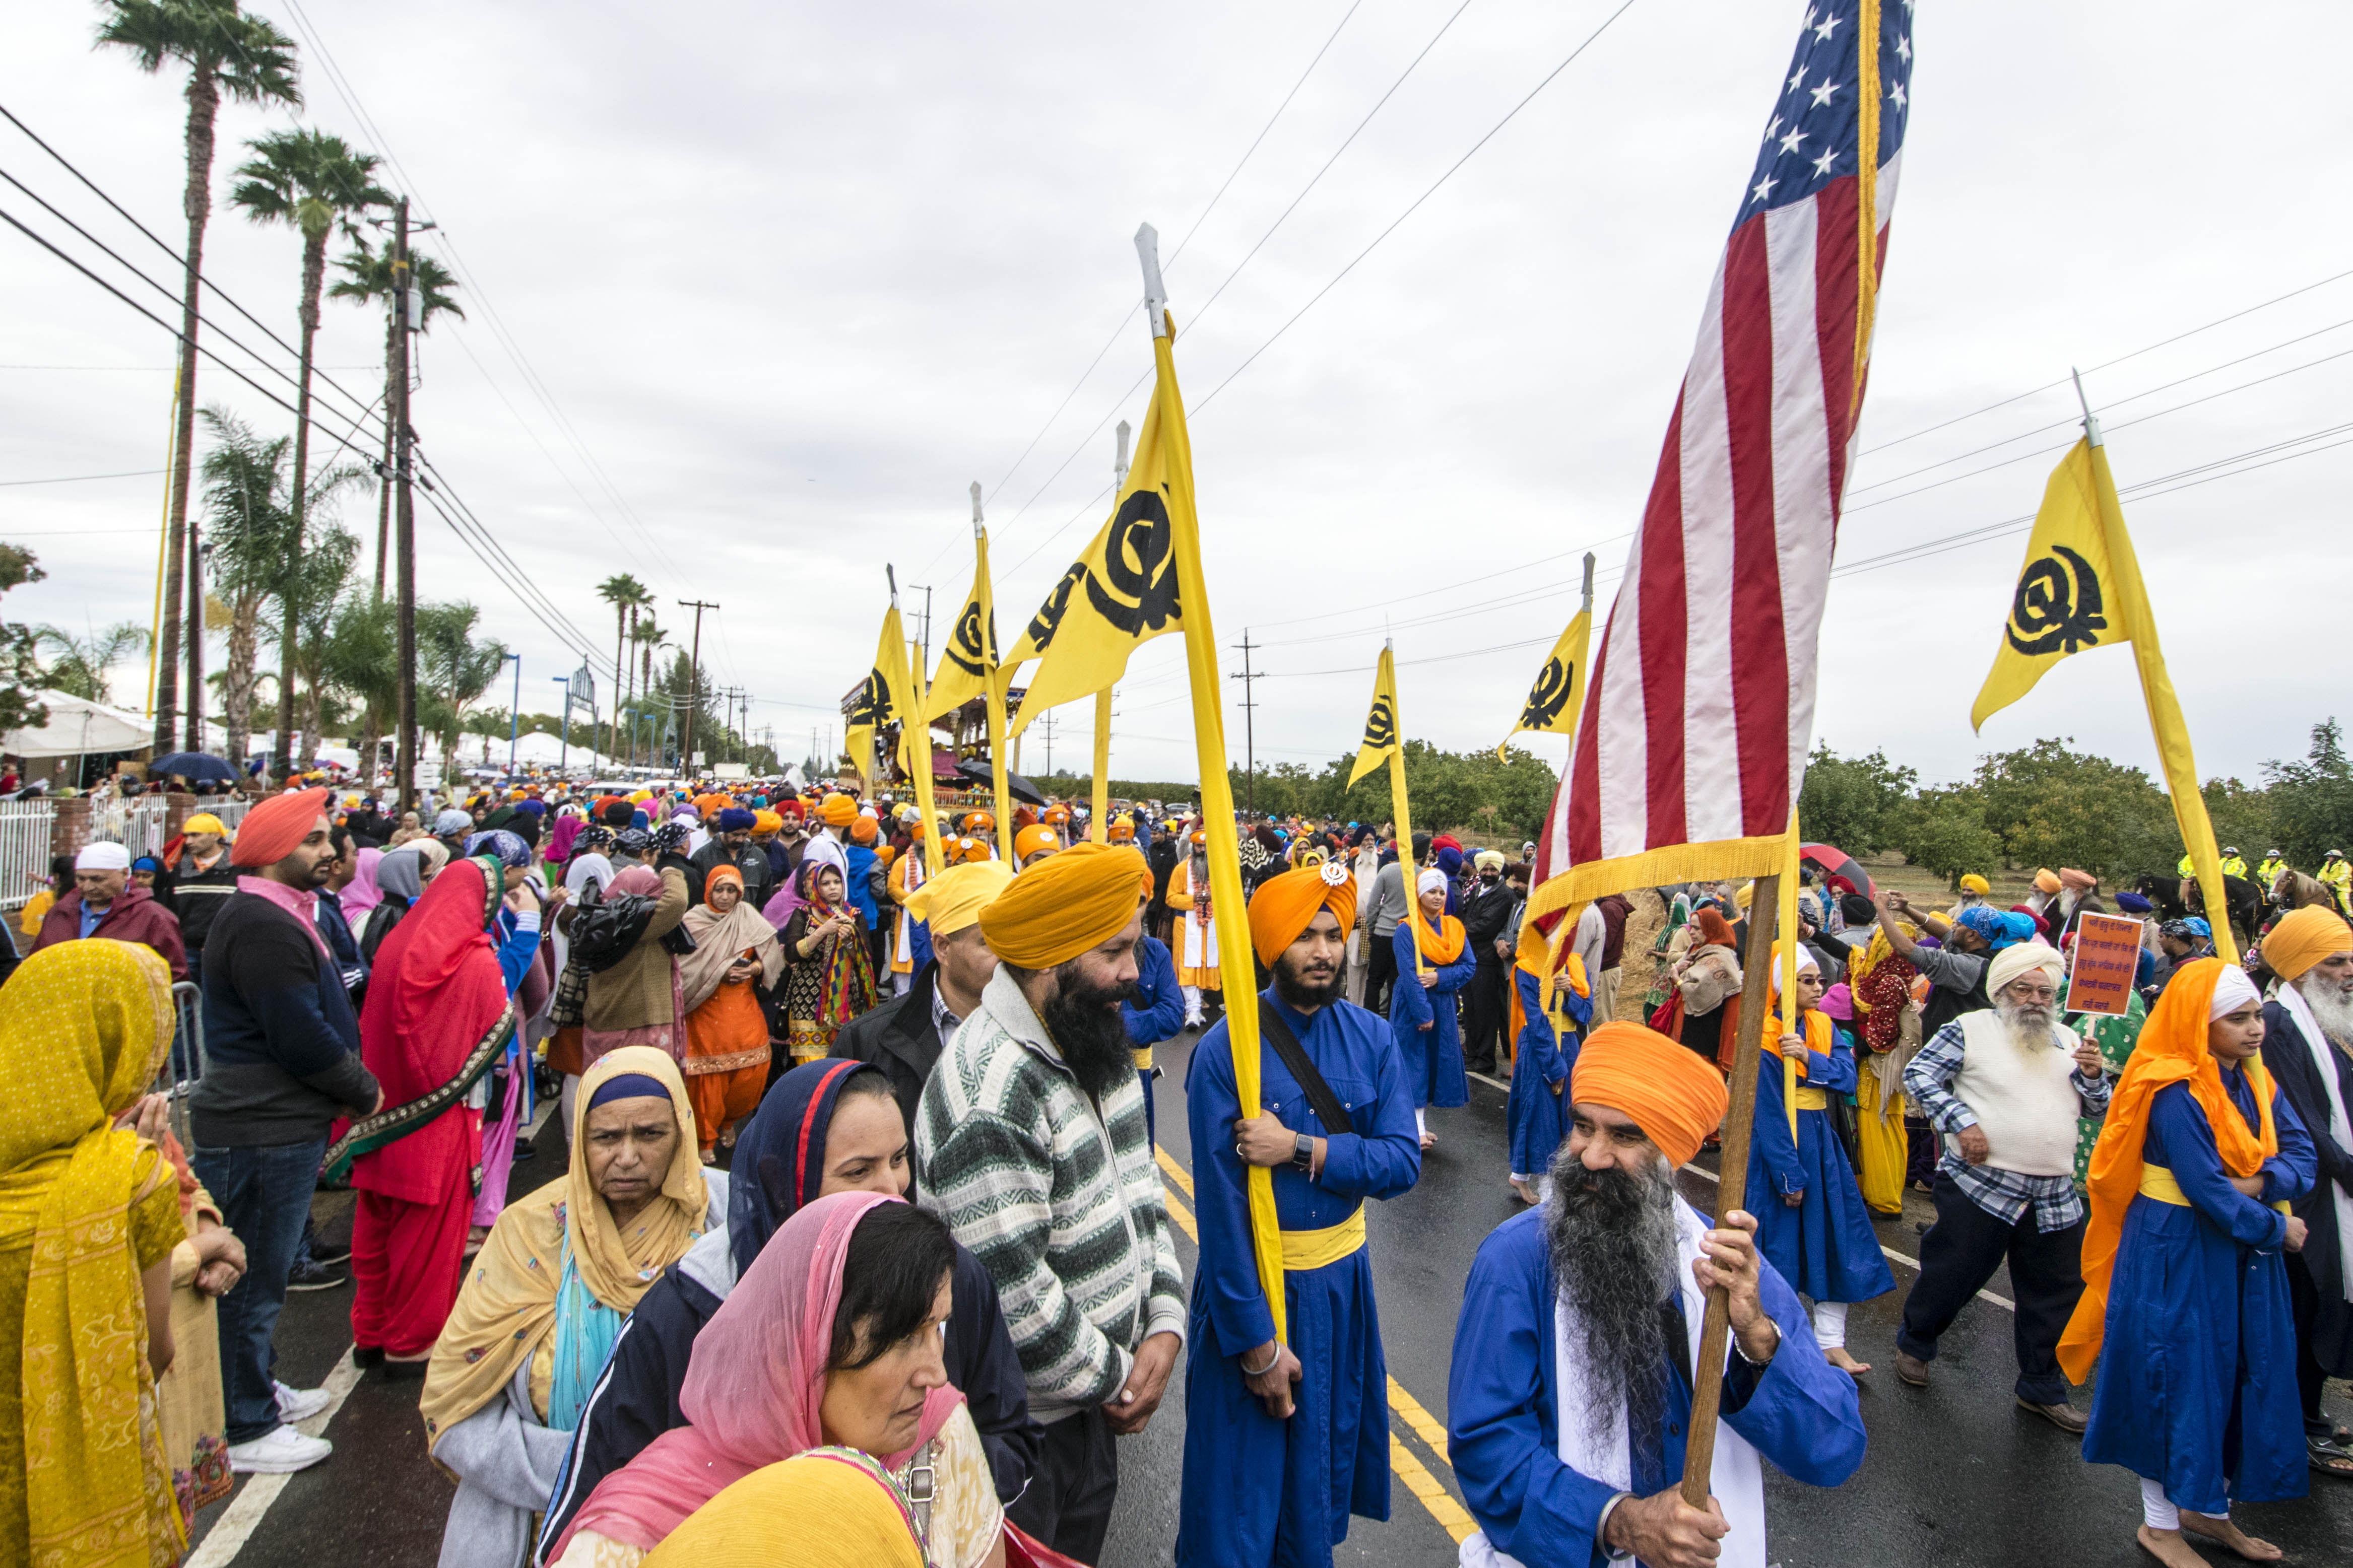 Sikh Festival and Parade in Yuba City Sacramento Valley